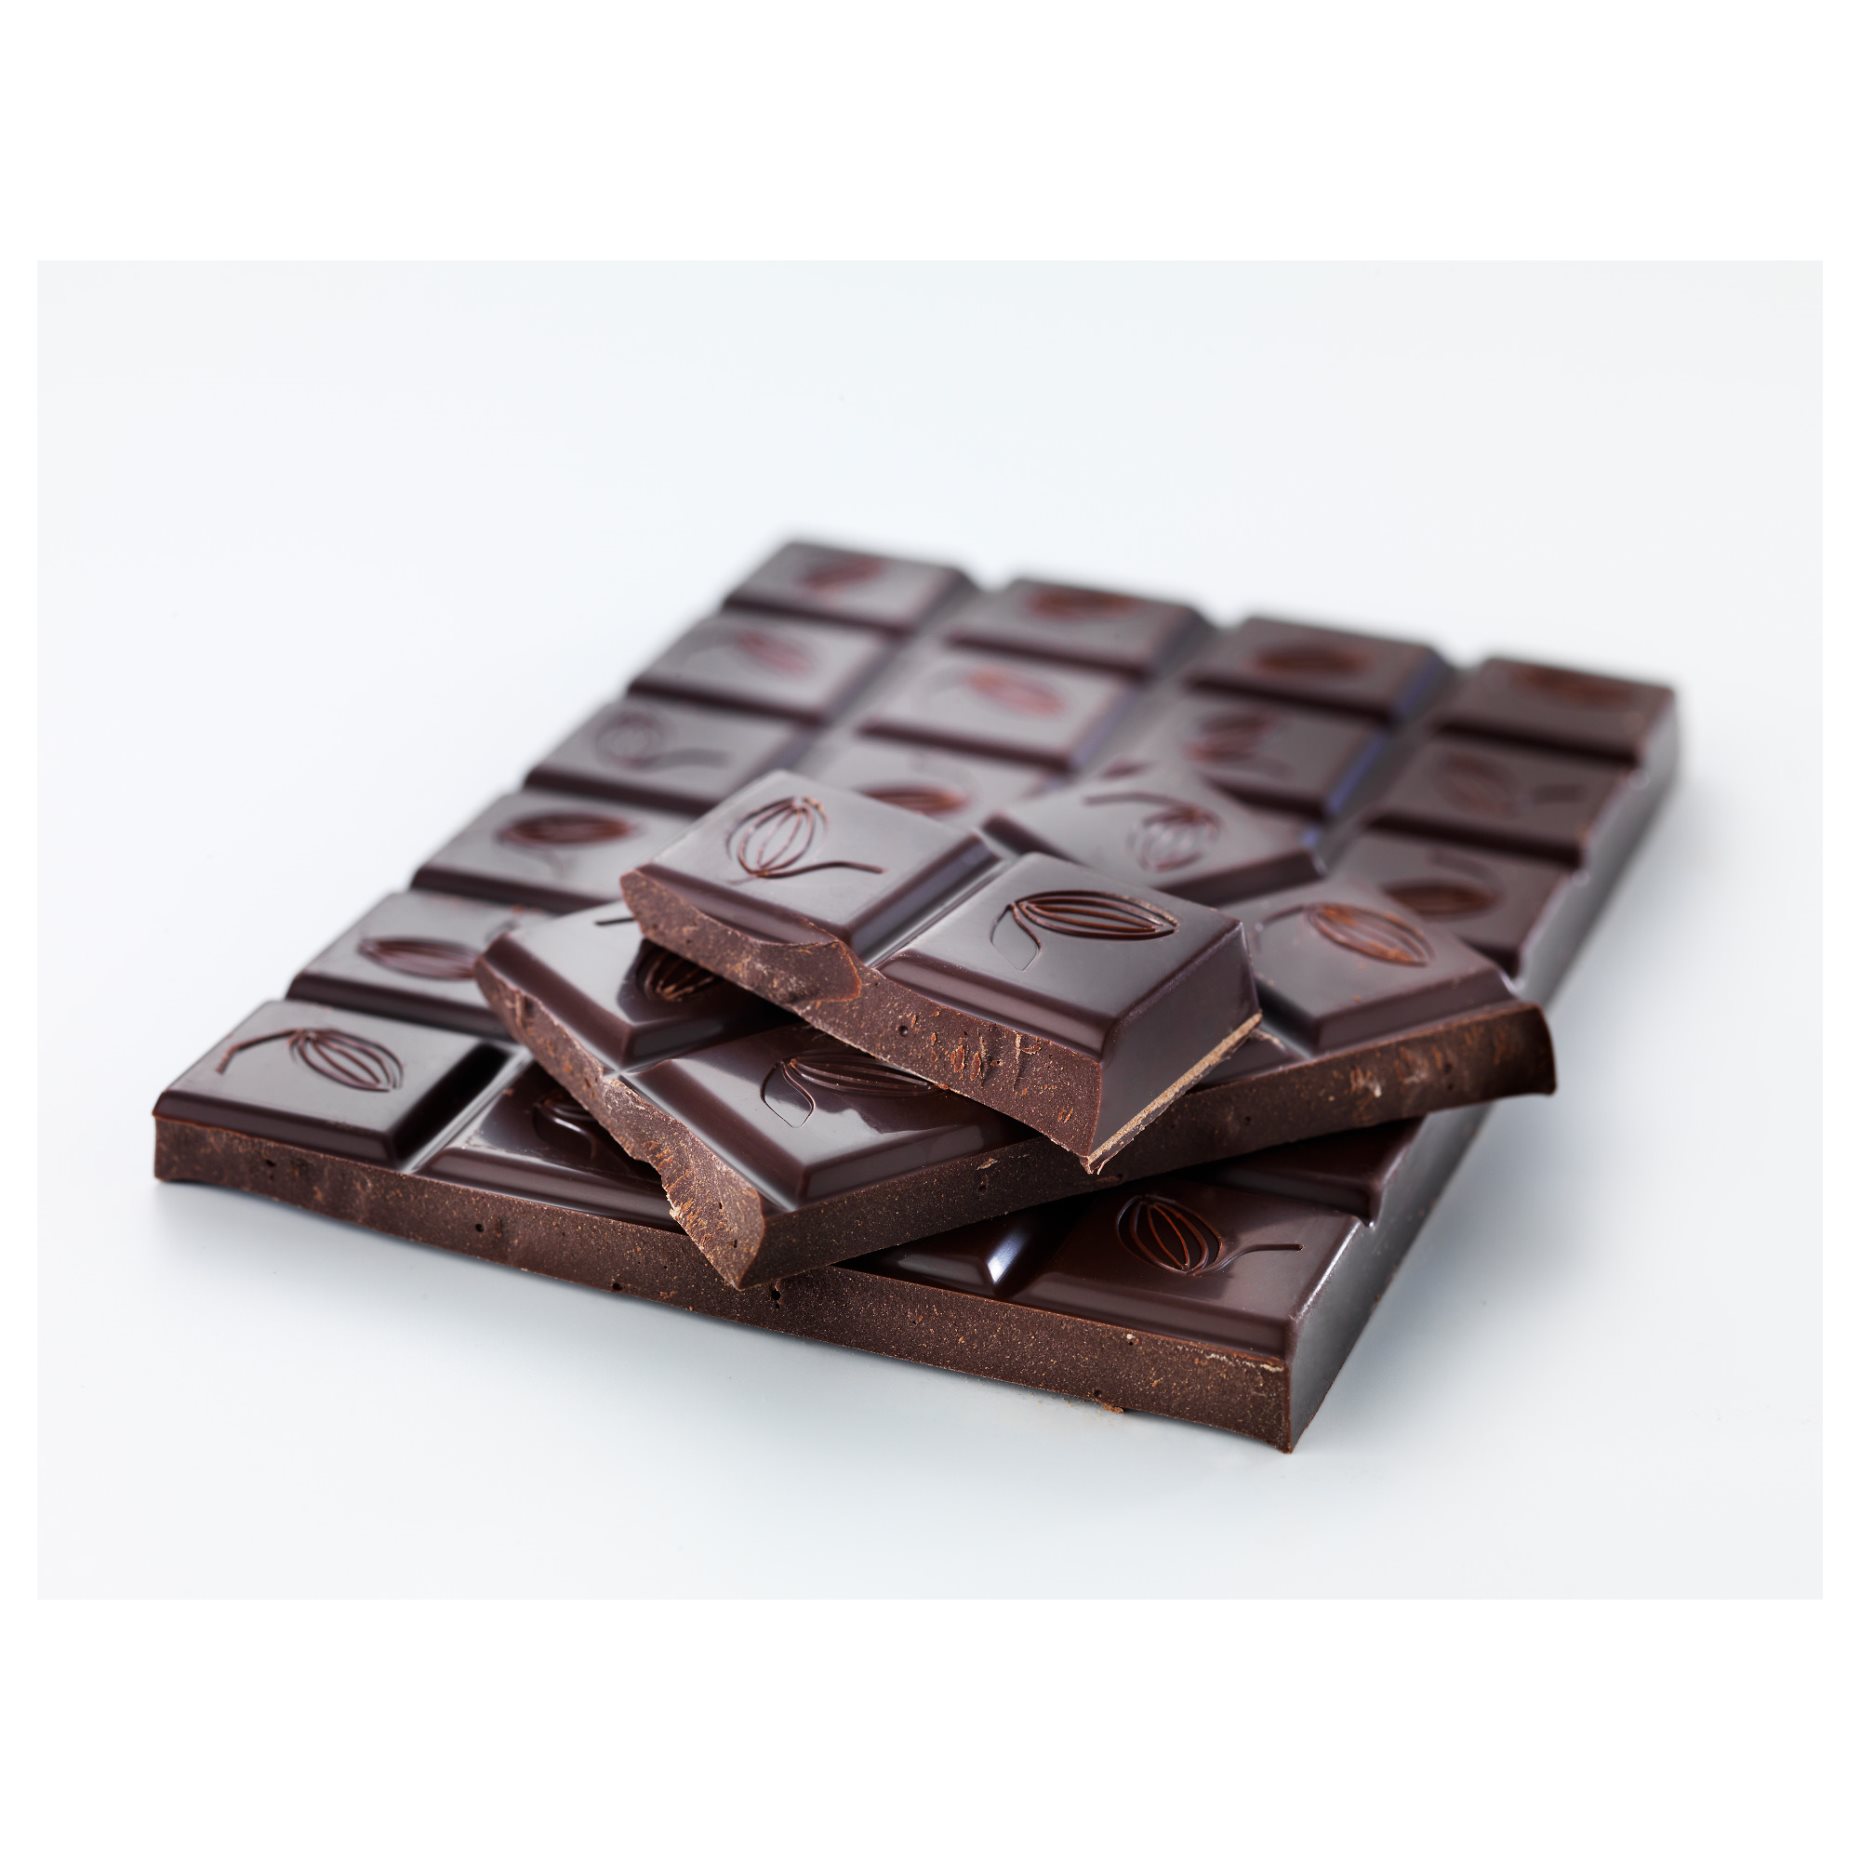 CHOKLAD MORK, dark chocolate/UTZ certified, 100 g, 002.939.27